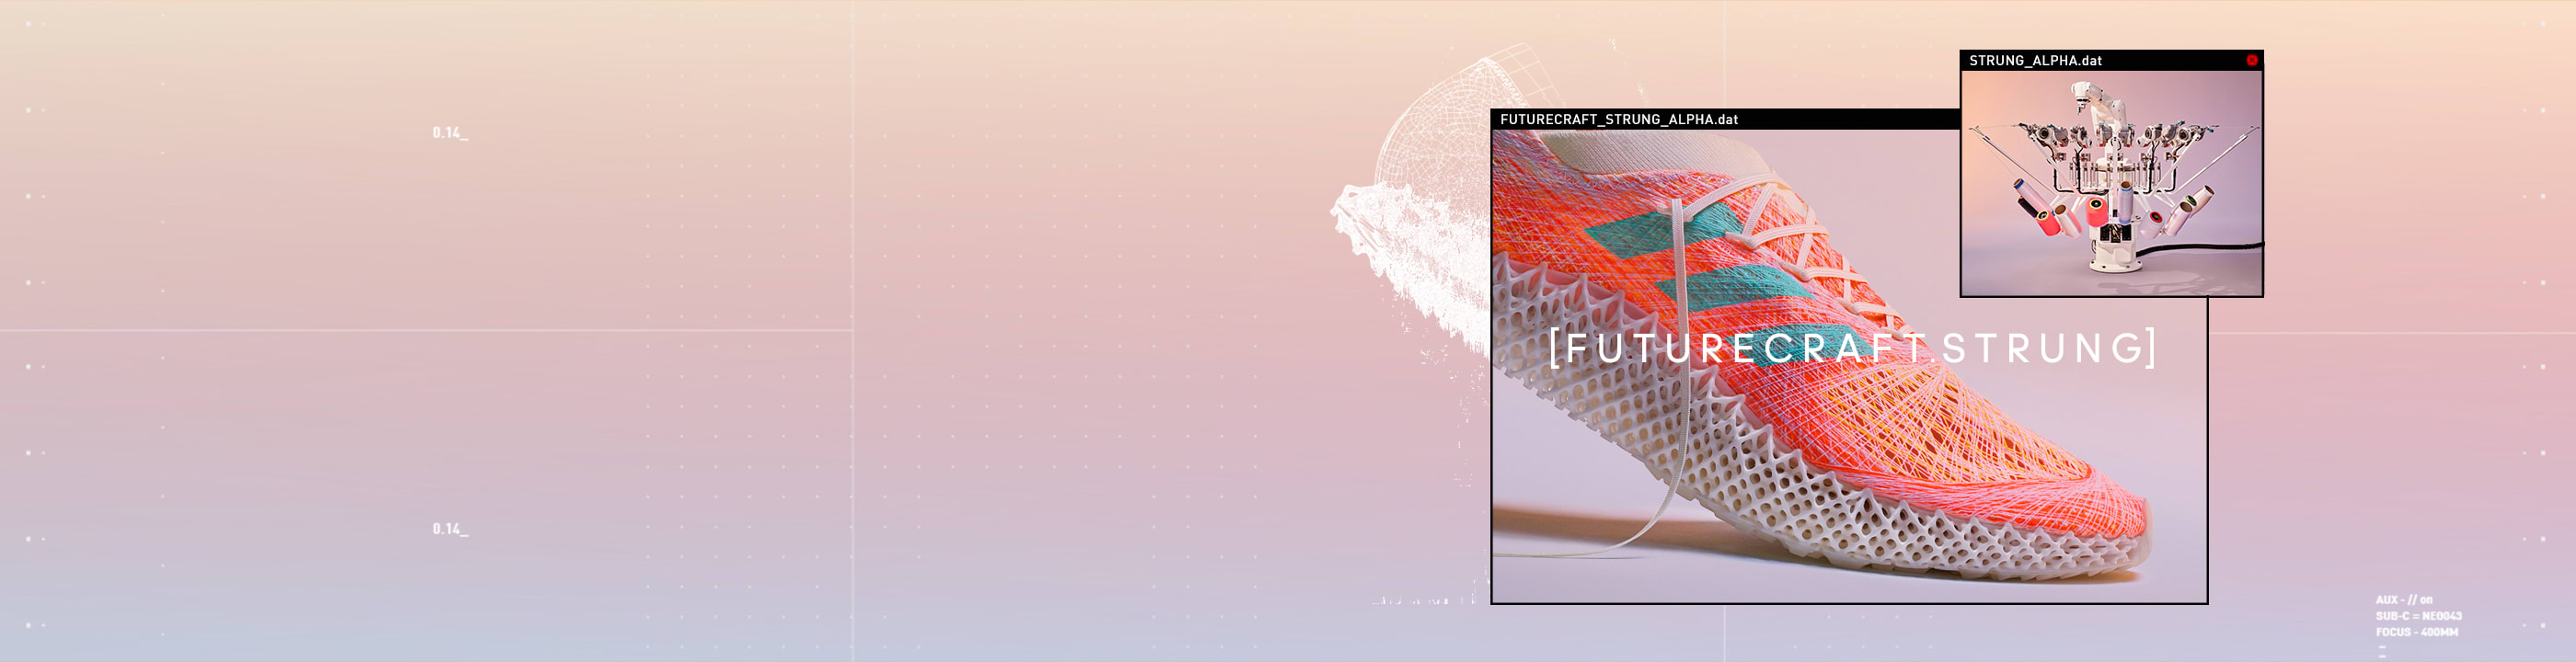 futurecraft adidas 4d